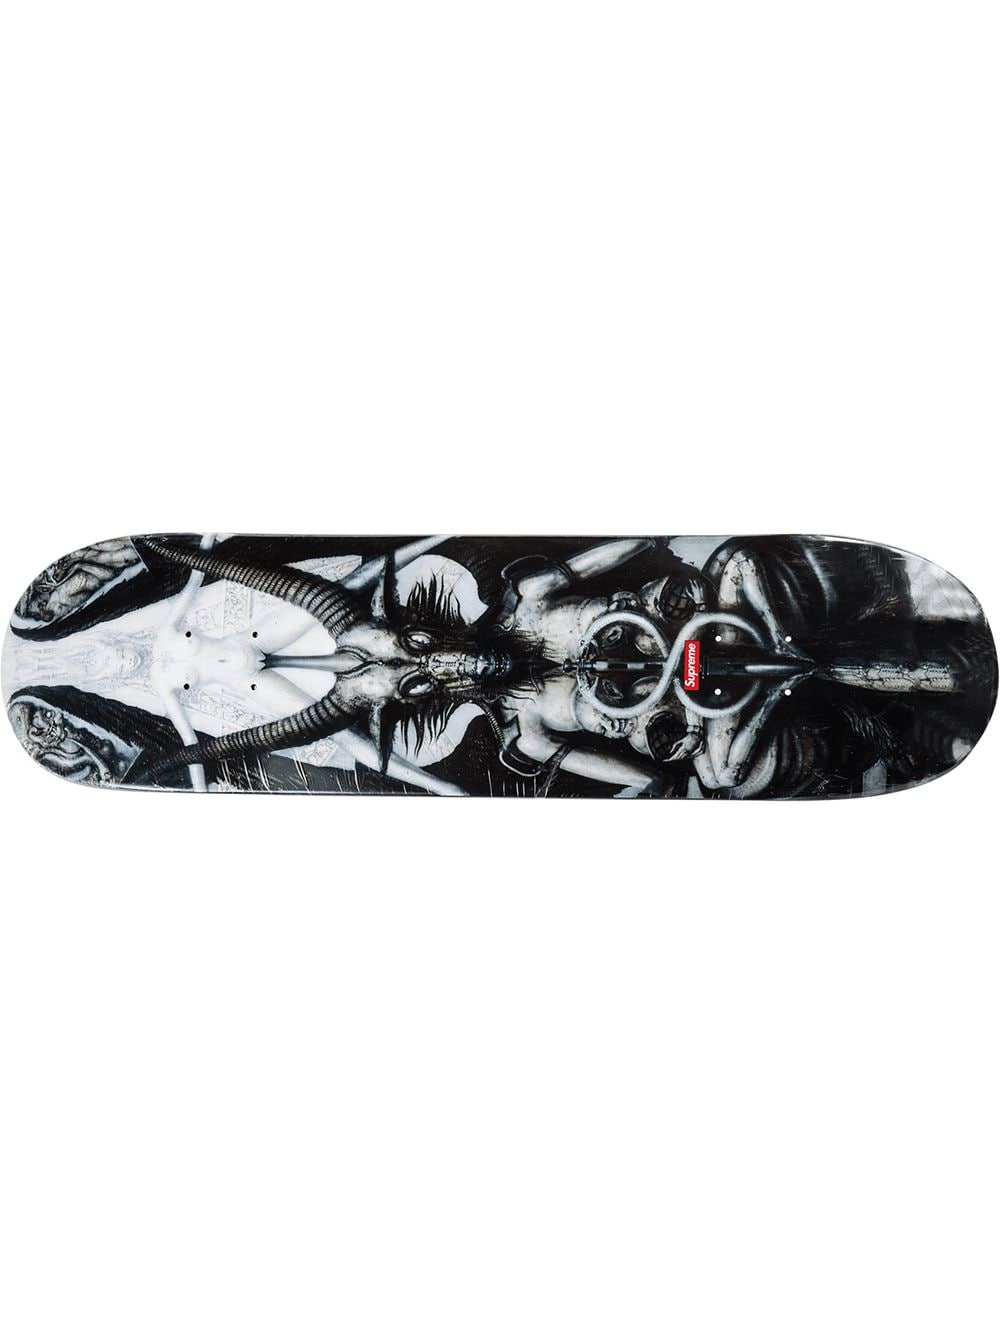 Image 1 of Supreme Giger graphic-print skateboard